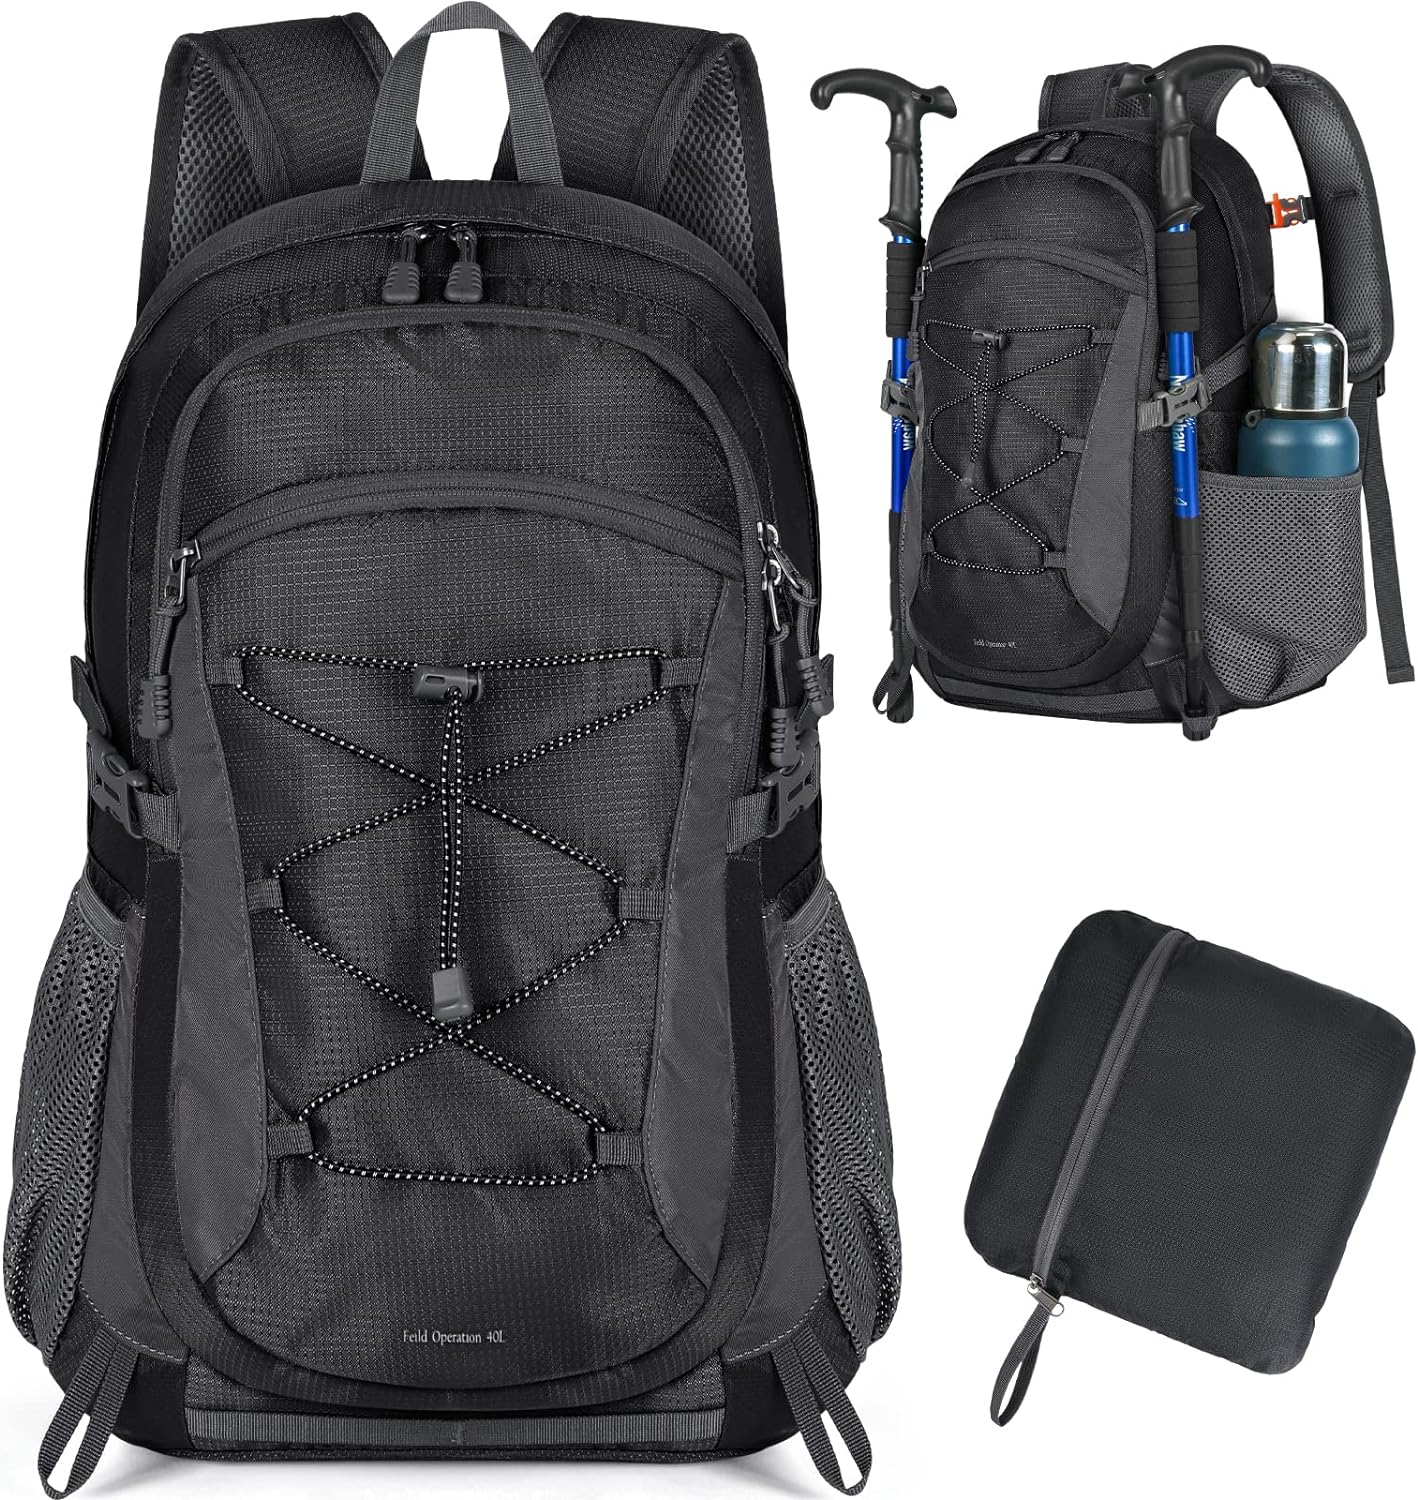 RAINSMORE Hiking Backpack 40L Waterproof Camping Backpack Lightweight Packable Backpack for Women Men Outdoor Travel Daypack